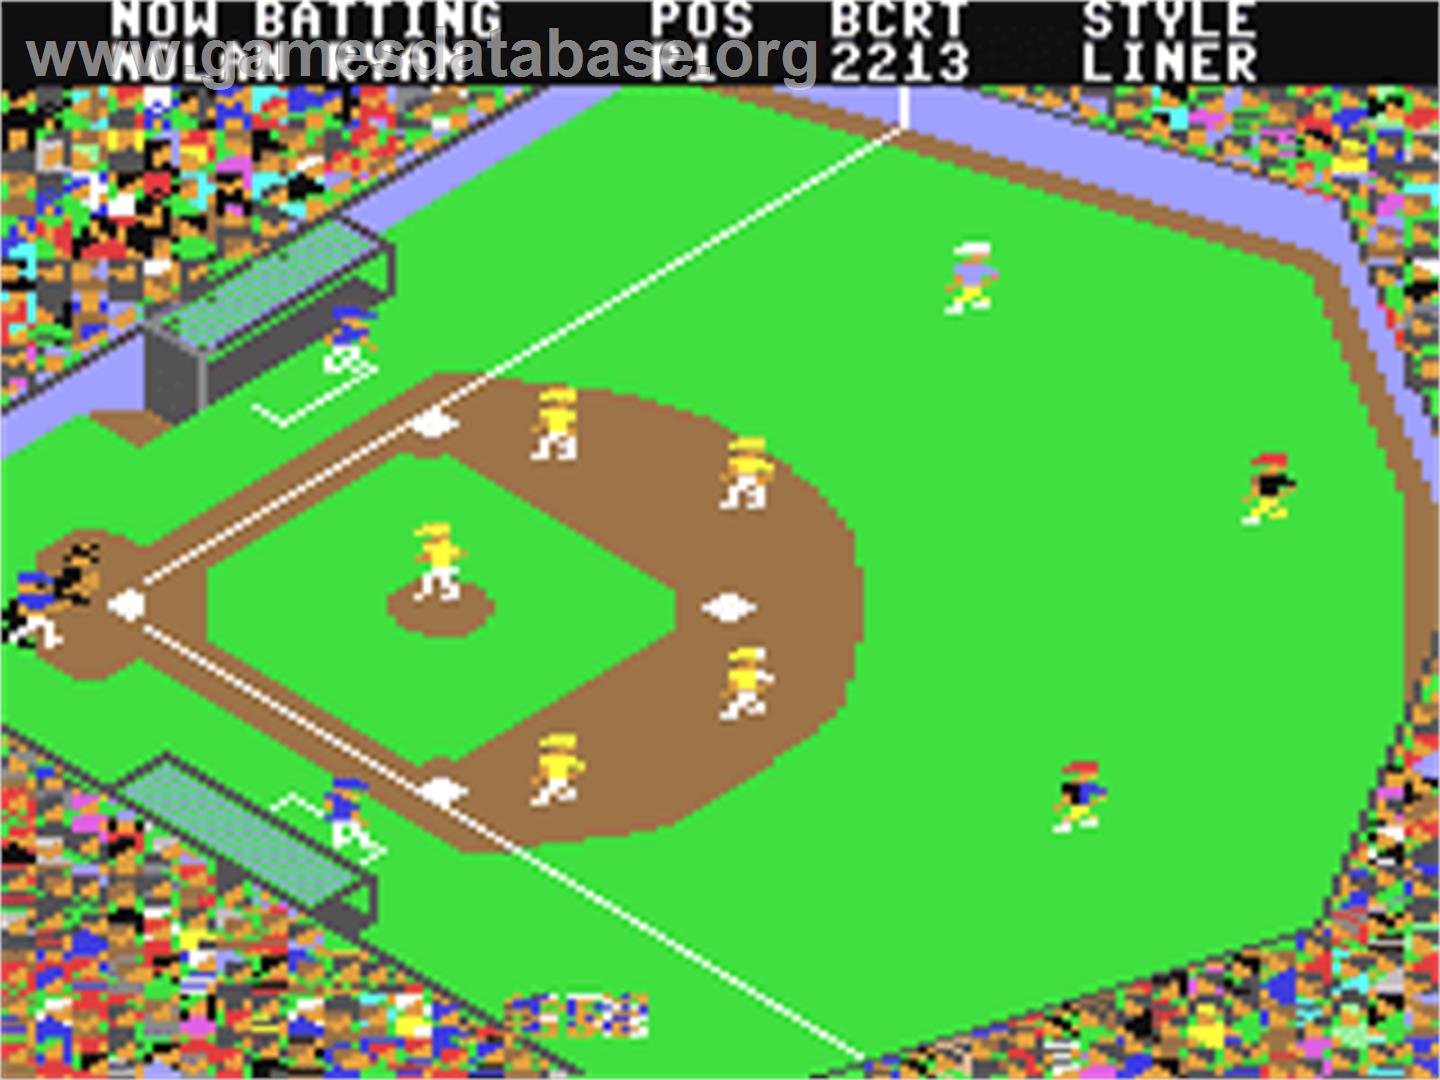 Championship Baseball - Commodore 64 - Artwork - In Game